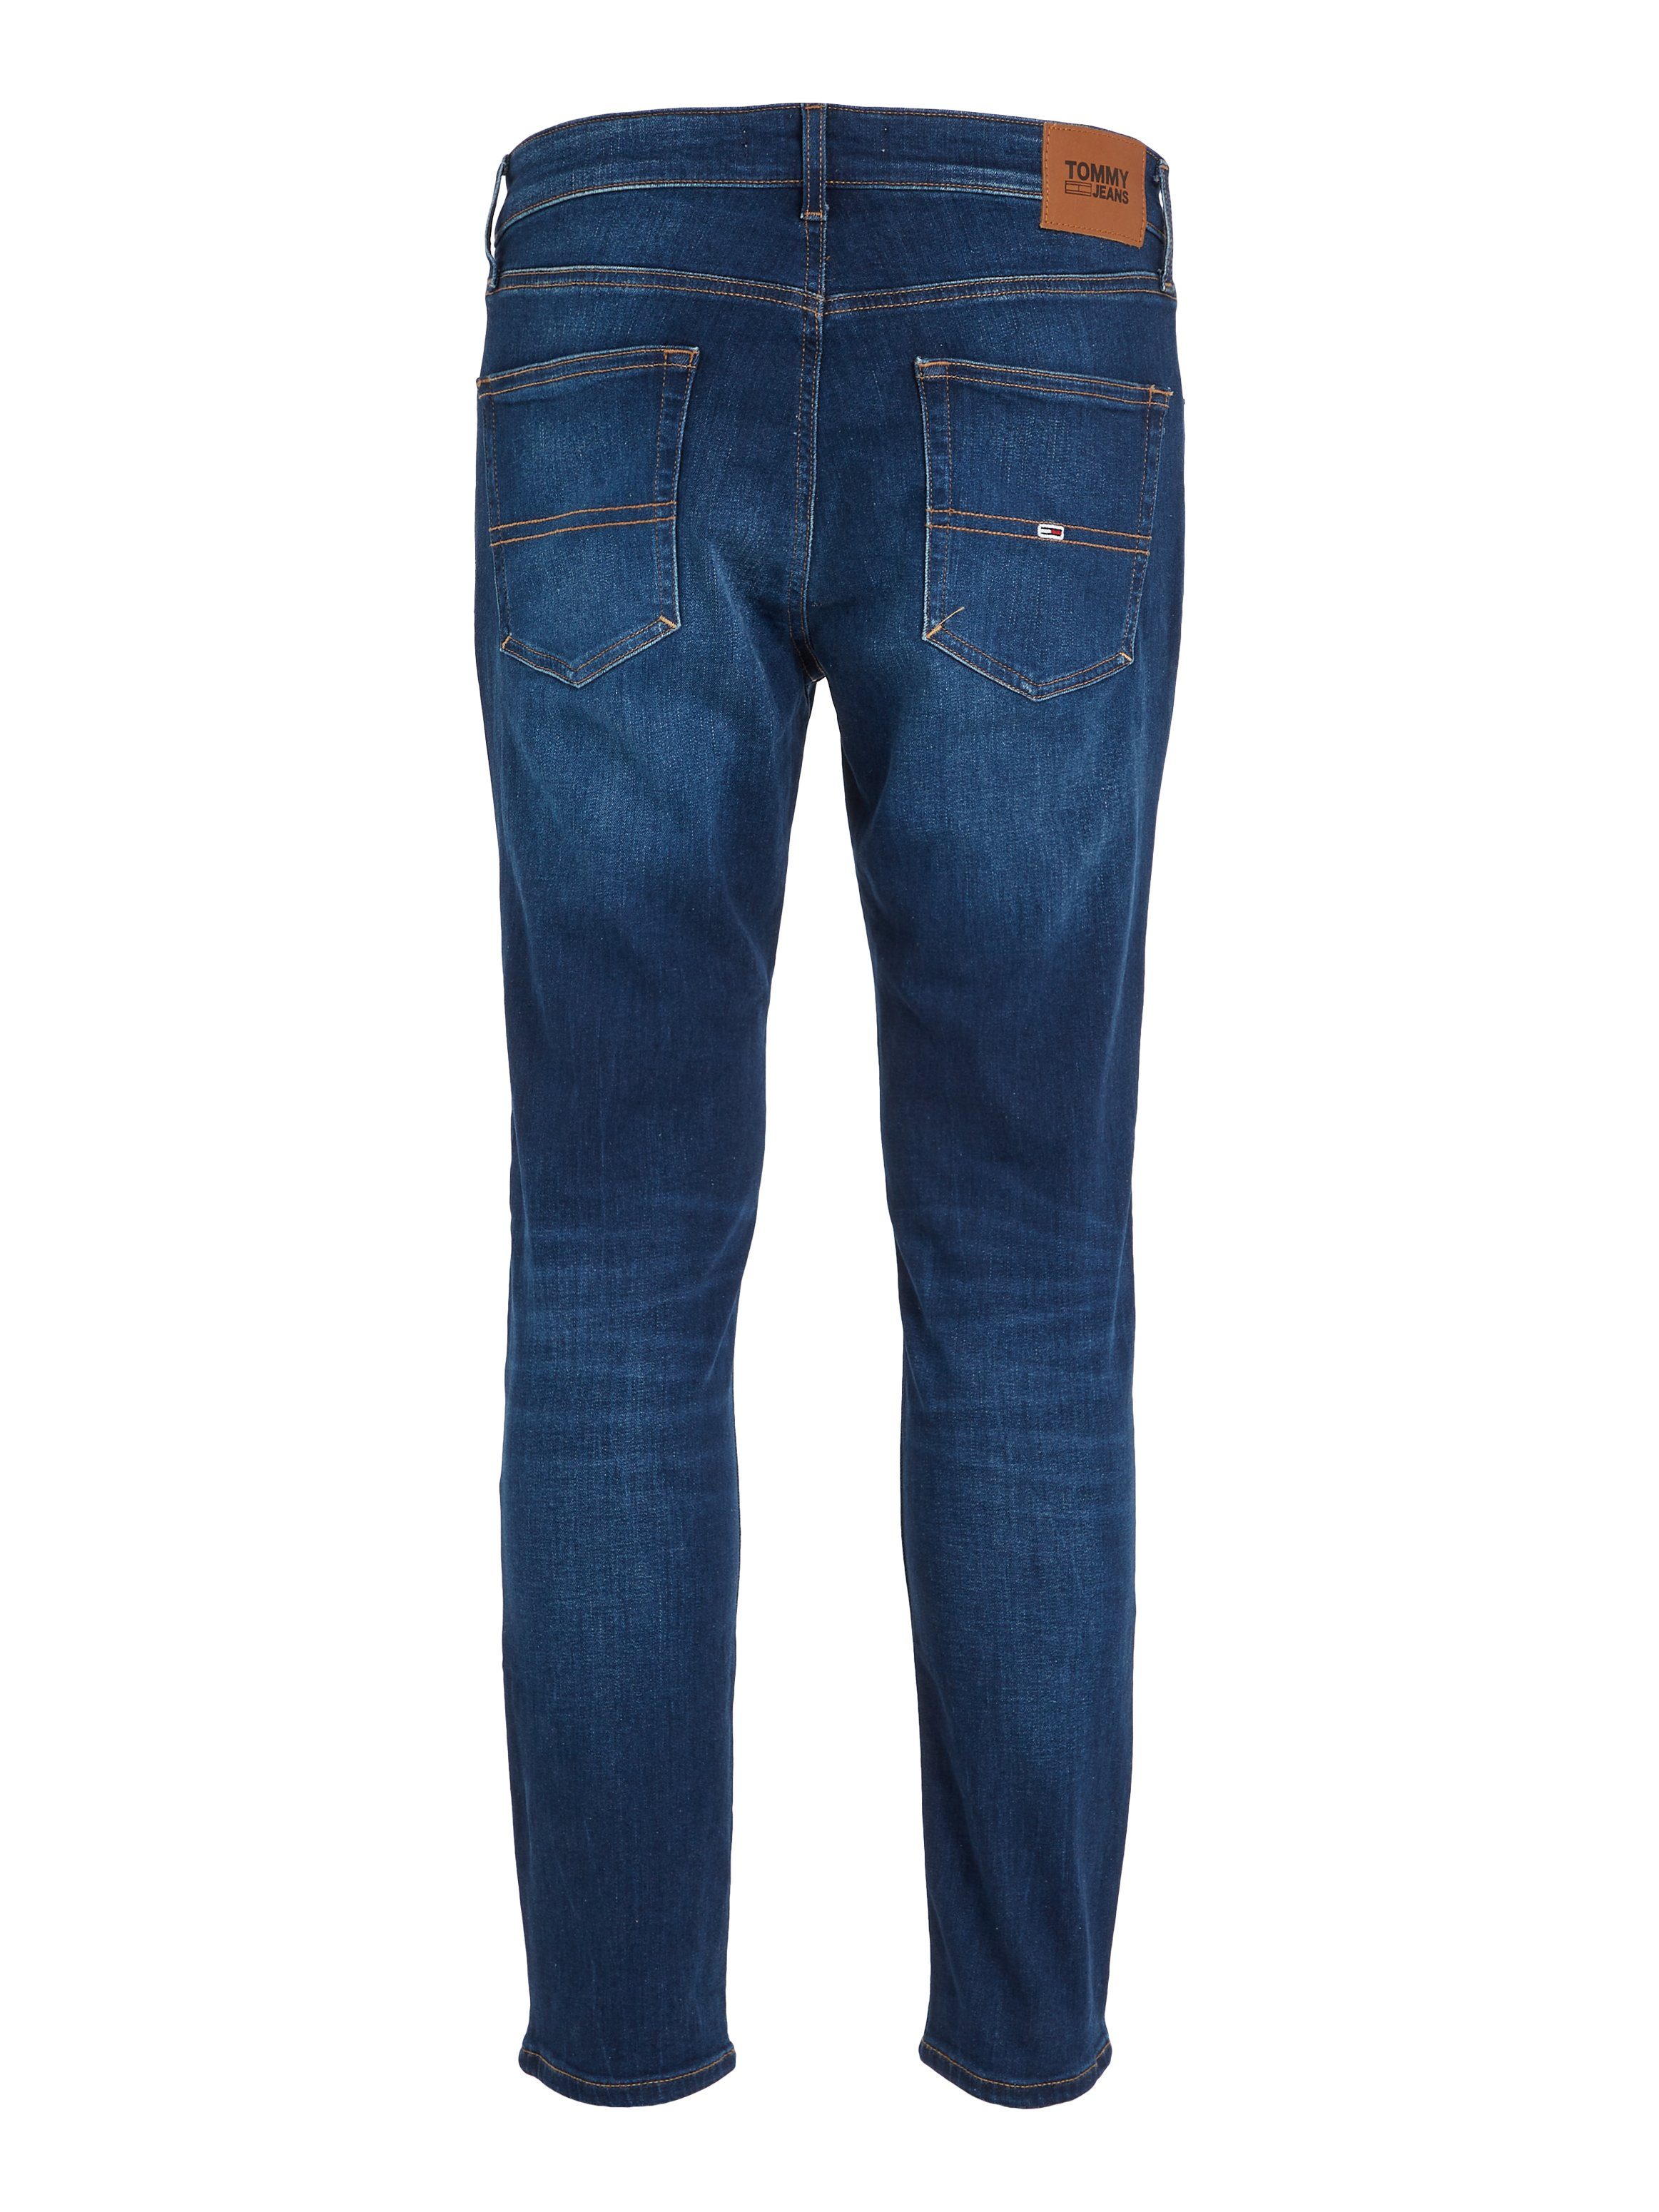 SLIM TAPERED aspen Jeans Tapered-fit-Jeans blue Tommy AUSTIN dark